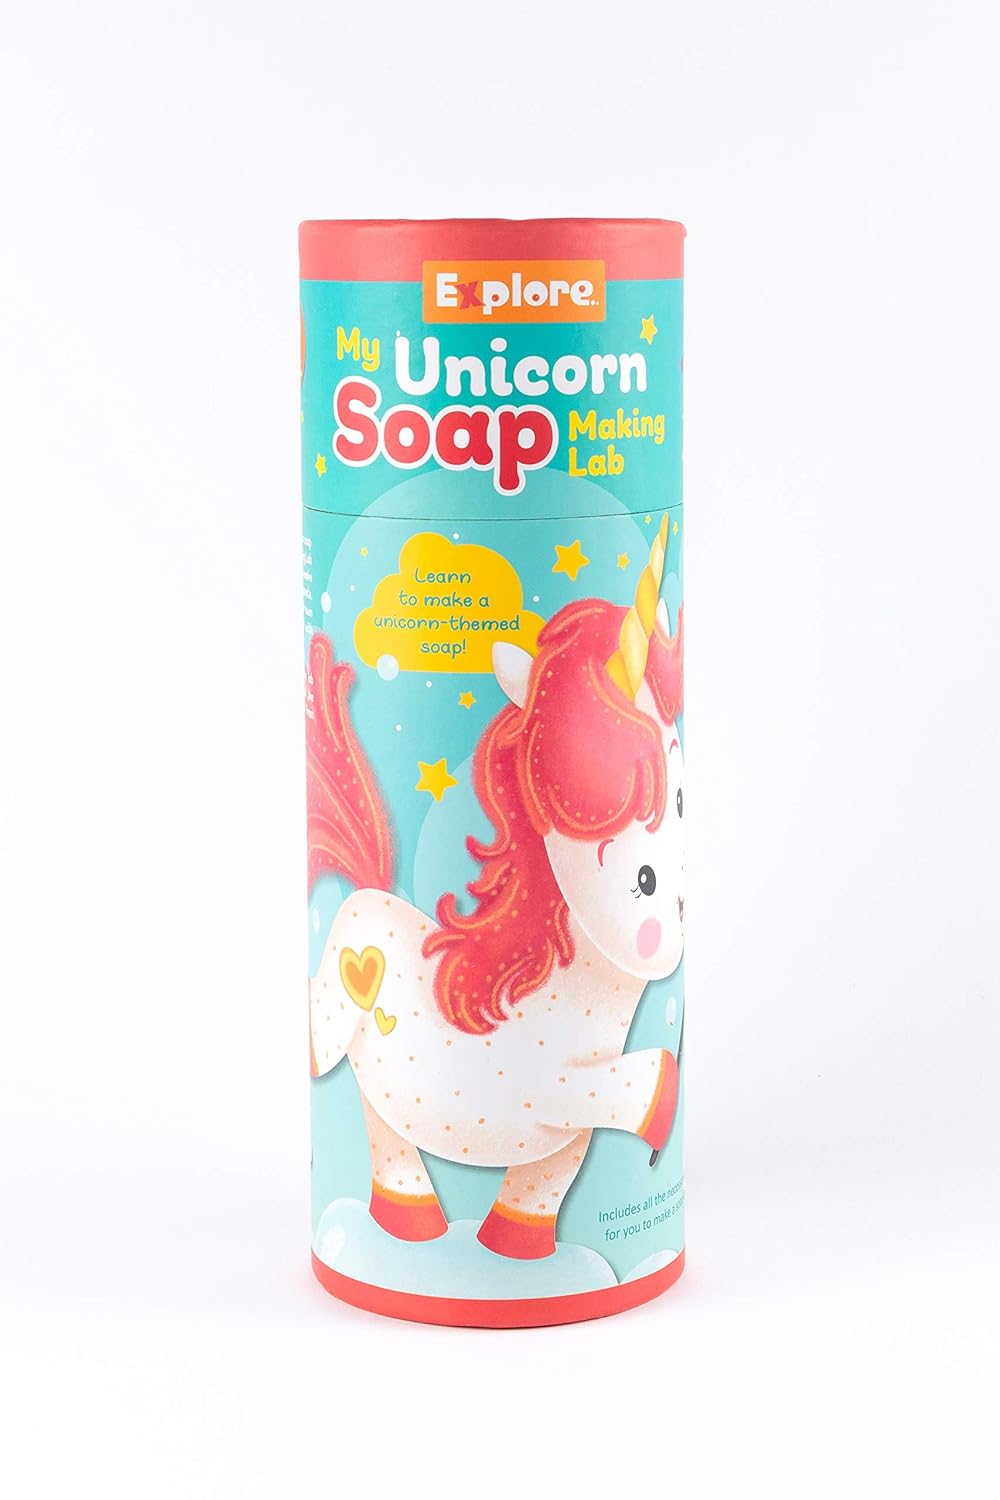 Explore My Unicorn Soap Making Lab DIY Activity Toy Kit